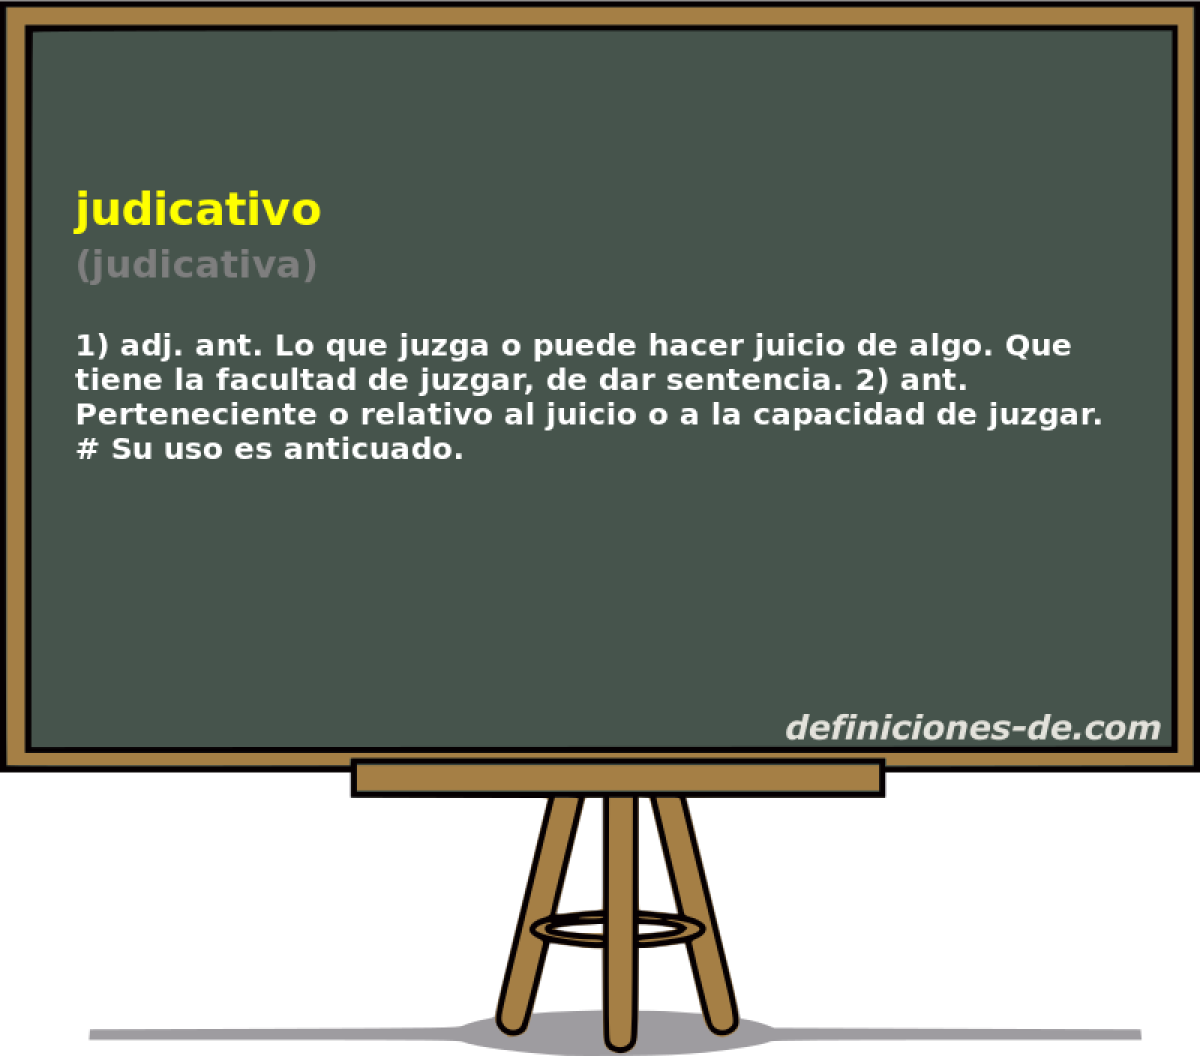 judicativo (judicativa)